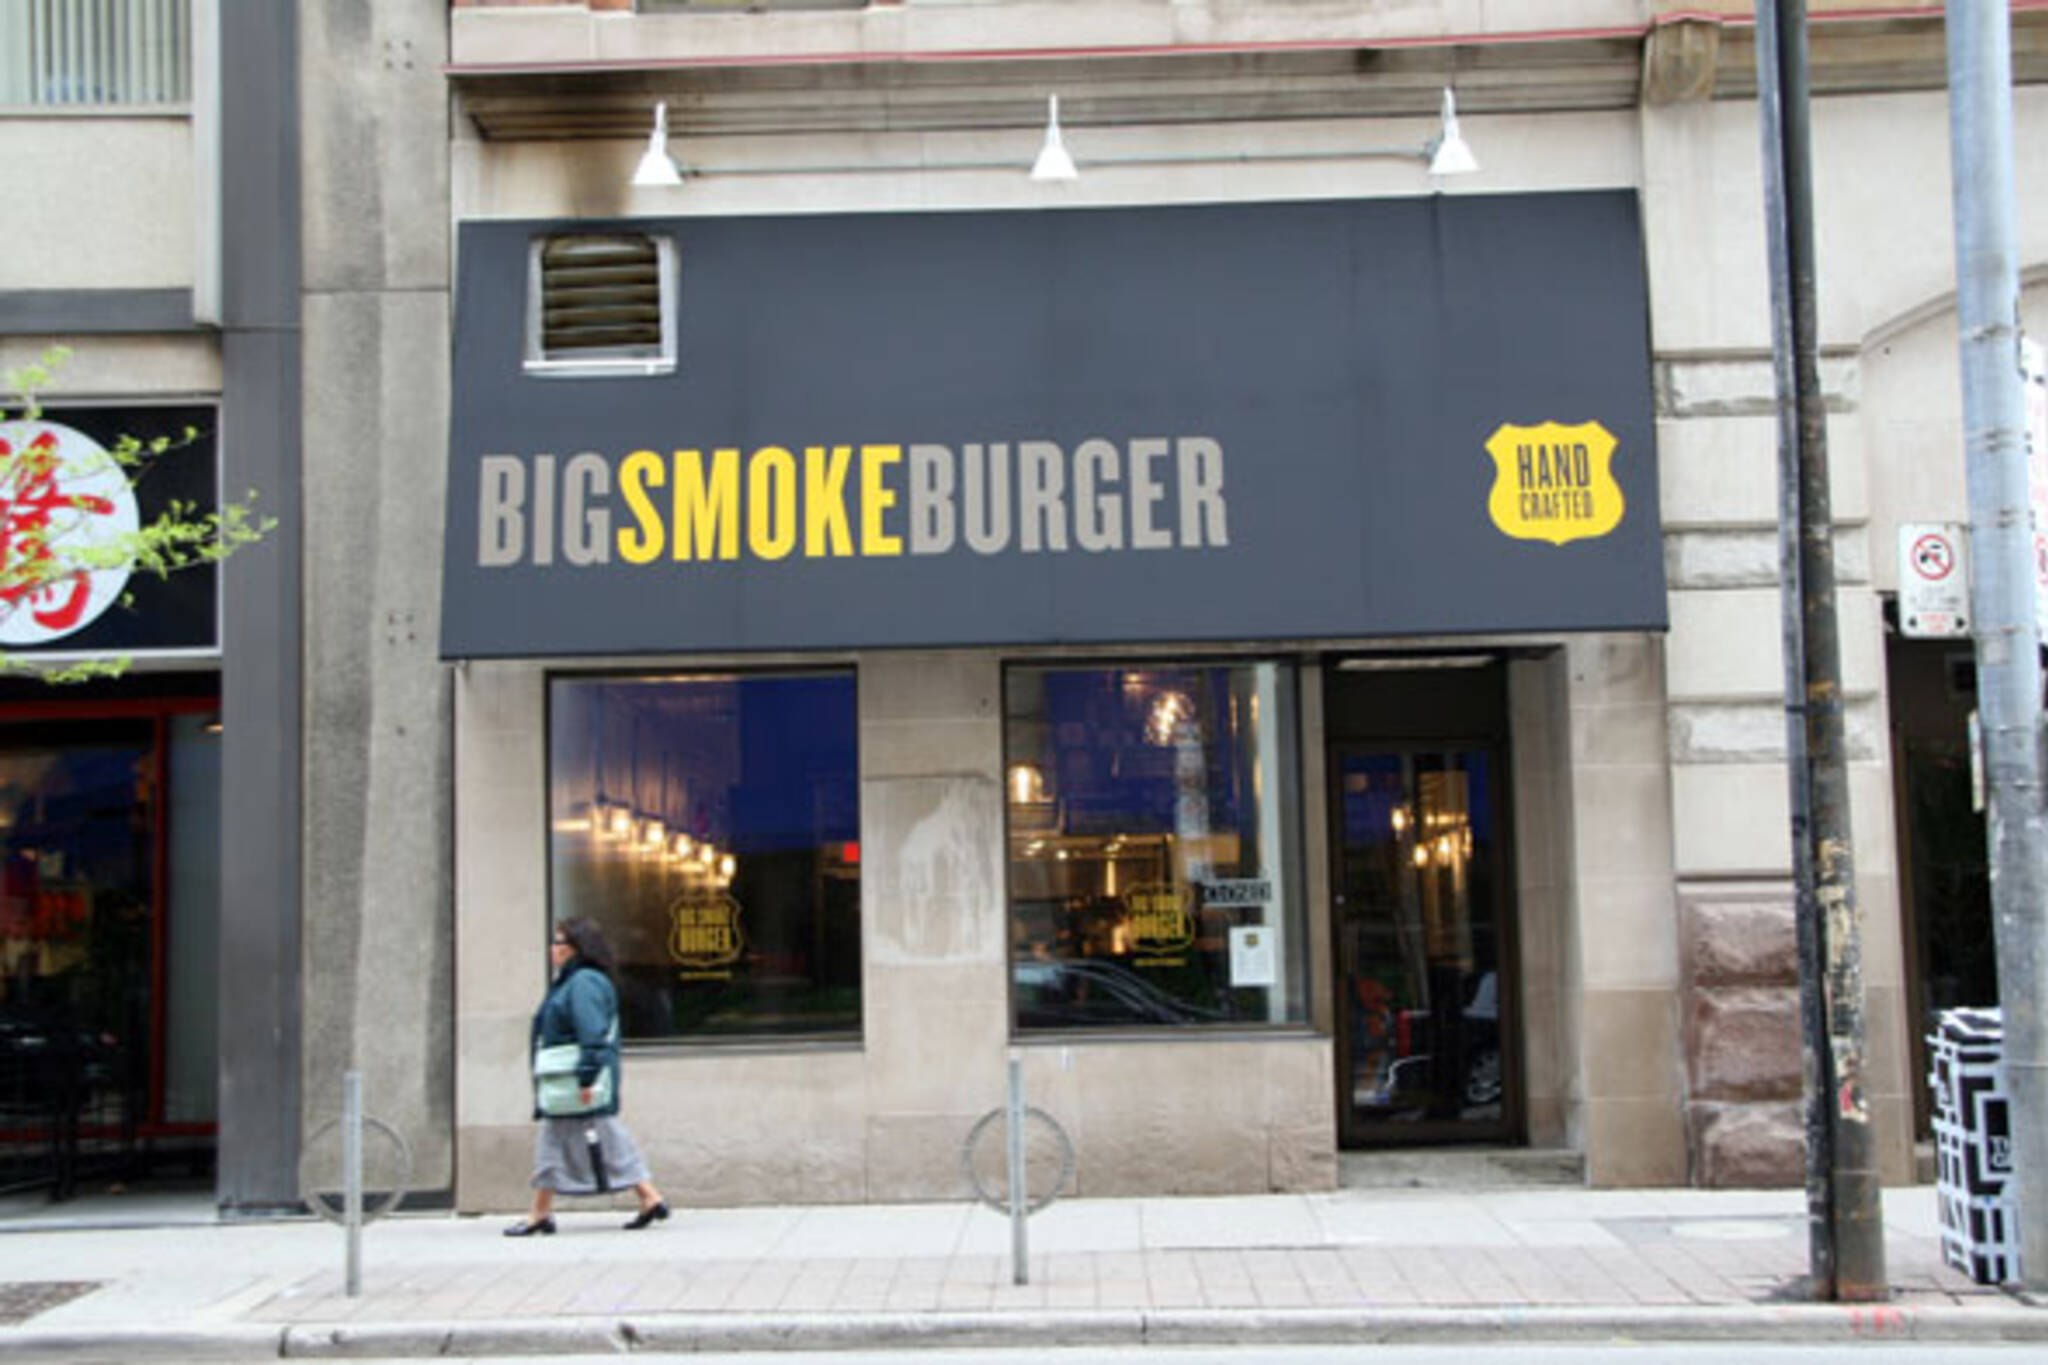 Big Smoke Burger